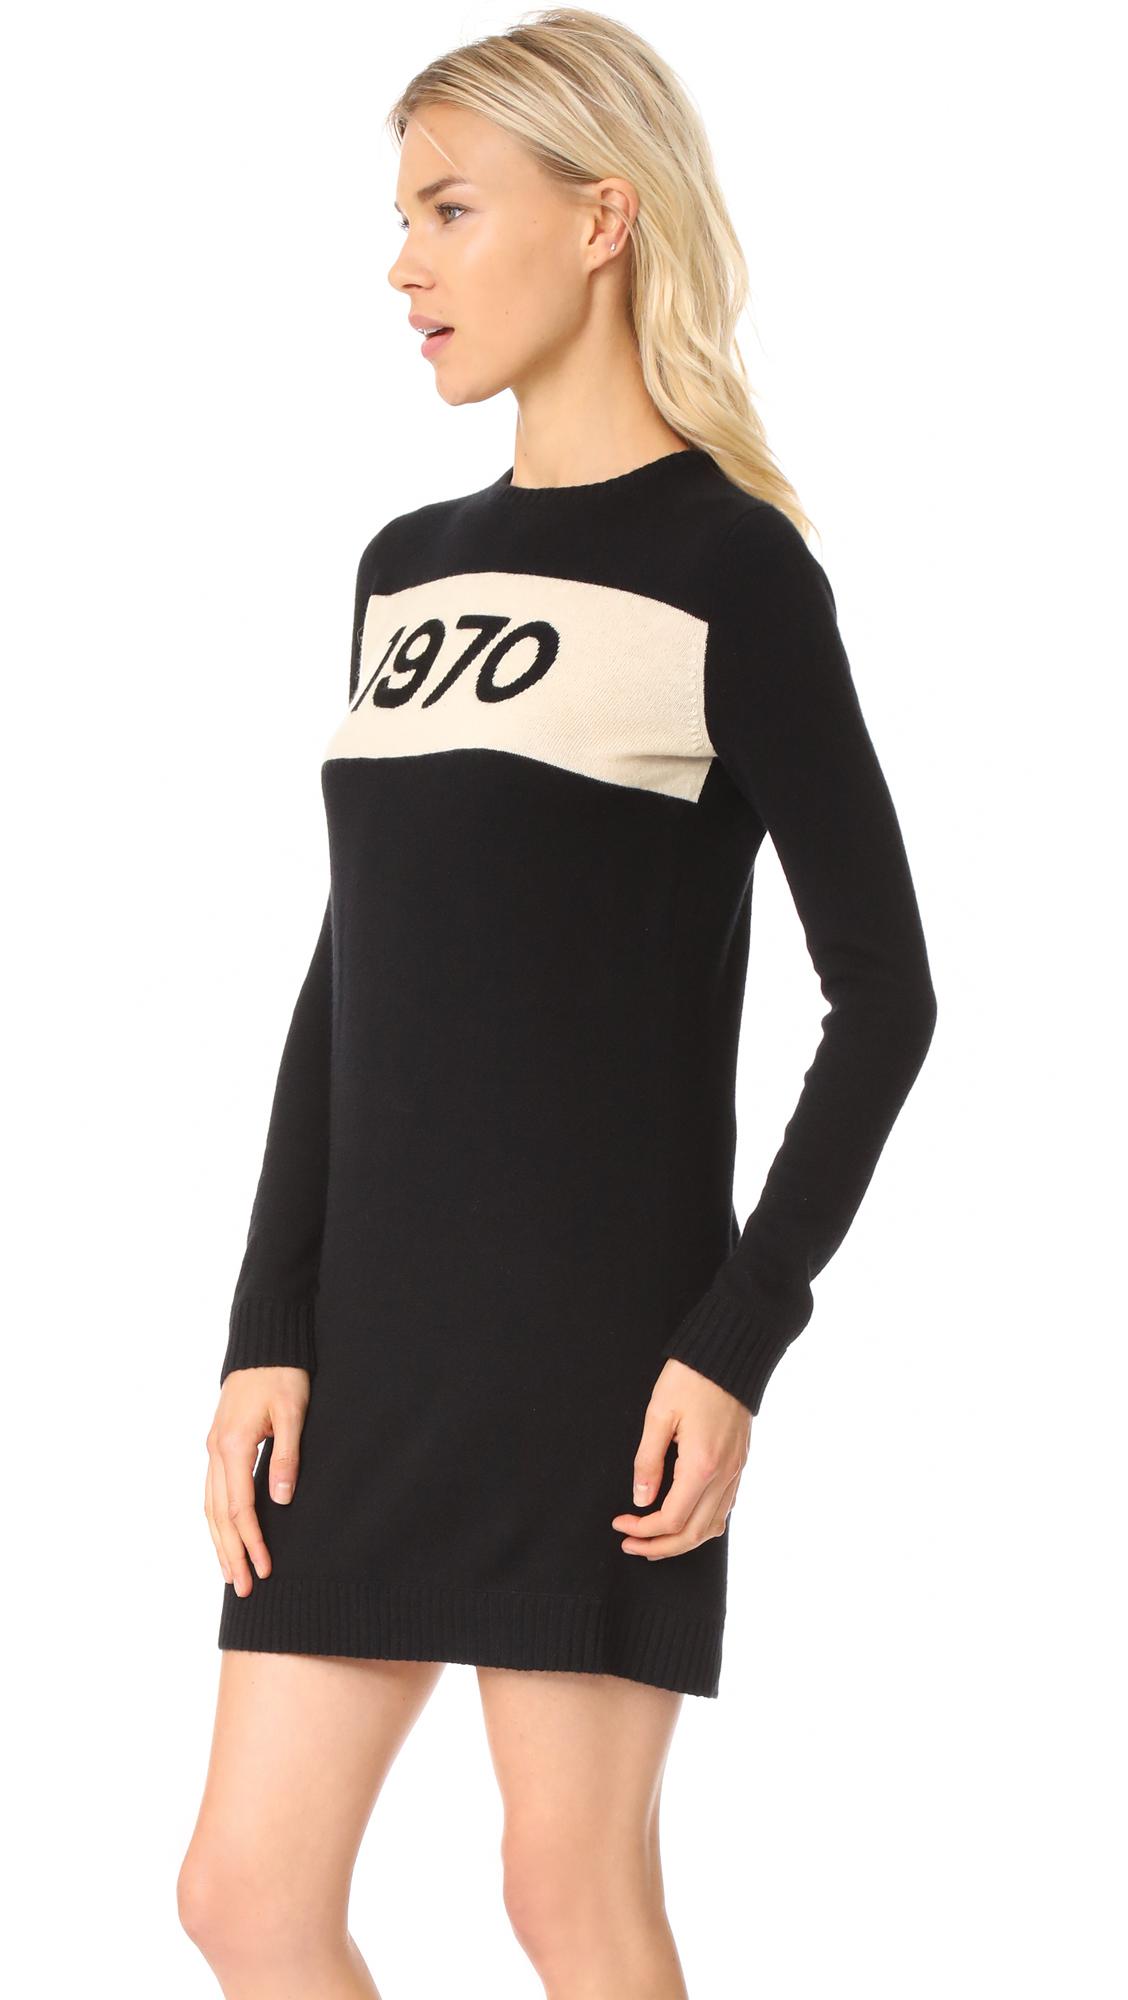 Bella Freud Wool 1970 Dress in Black - Lyst